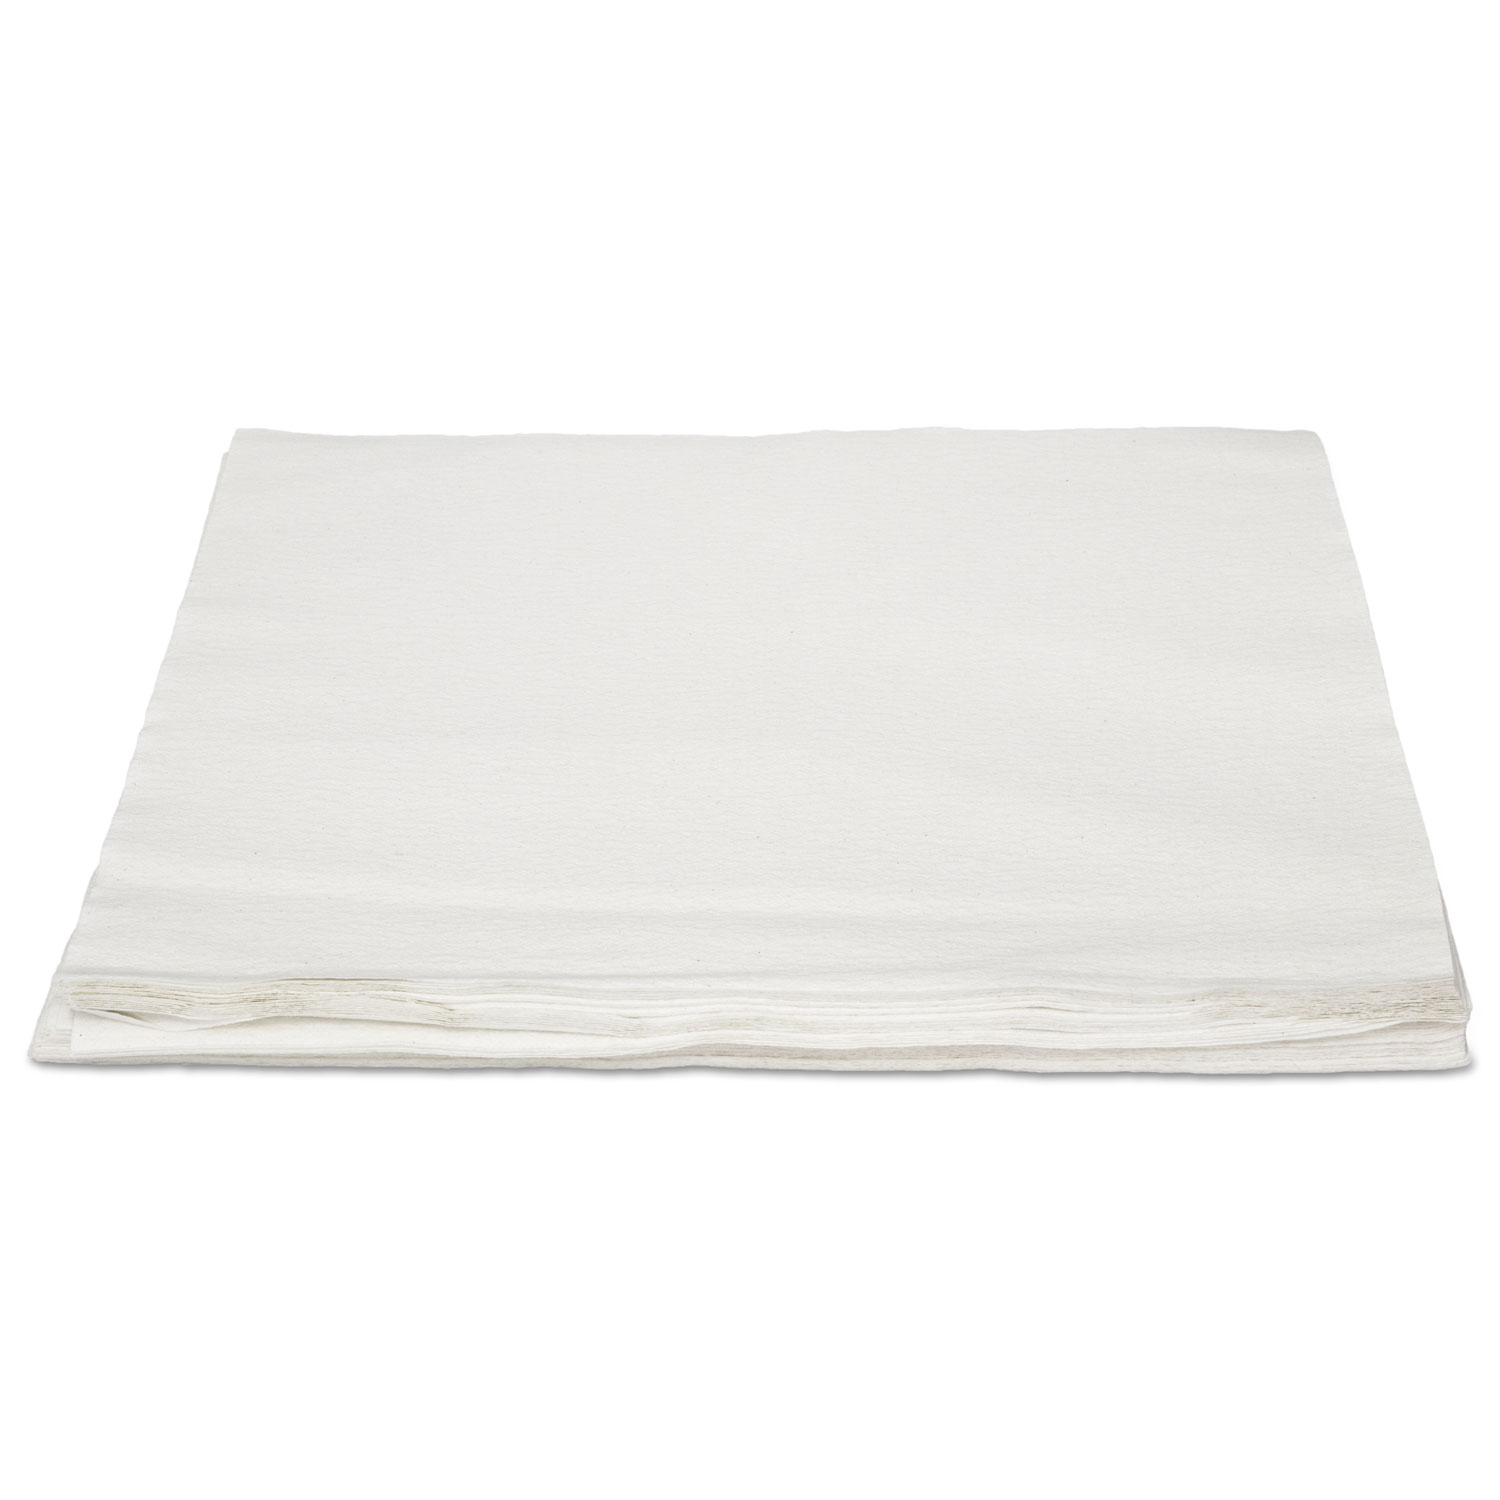 TASKBrand TopLine Linen Replacement Napkins, White, 16 x 16, 1000/Carton